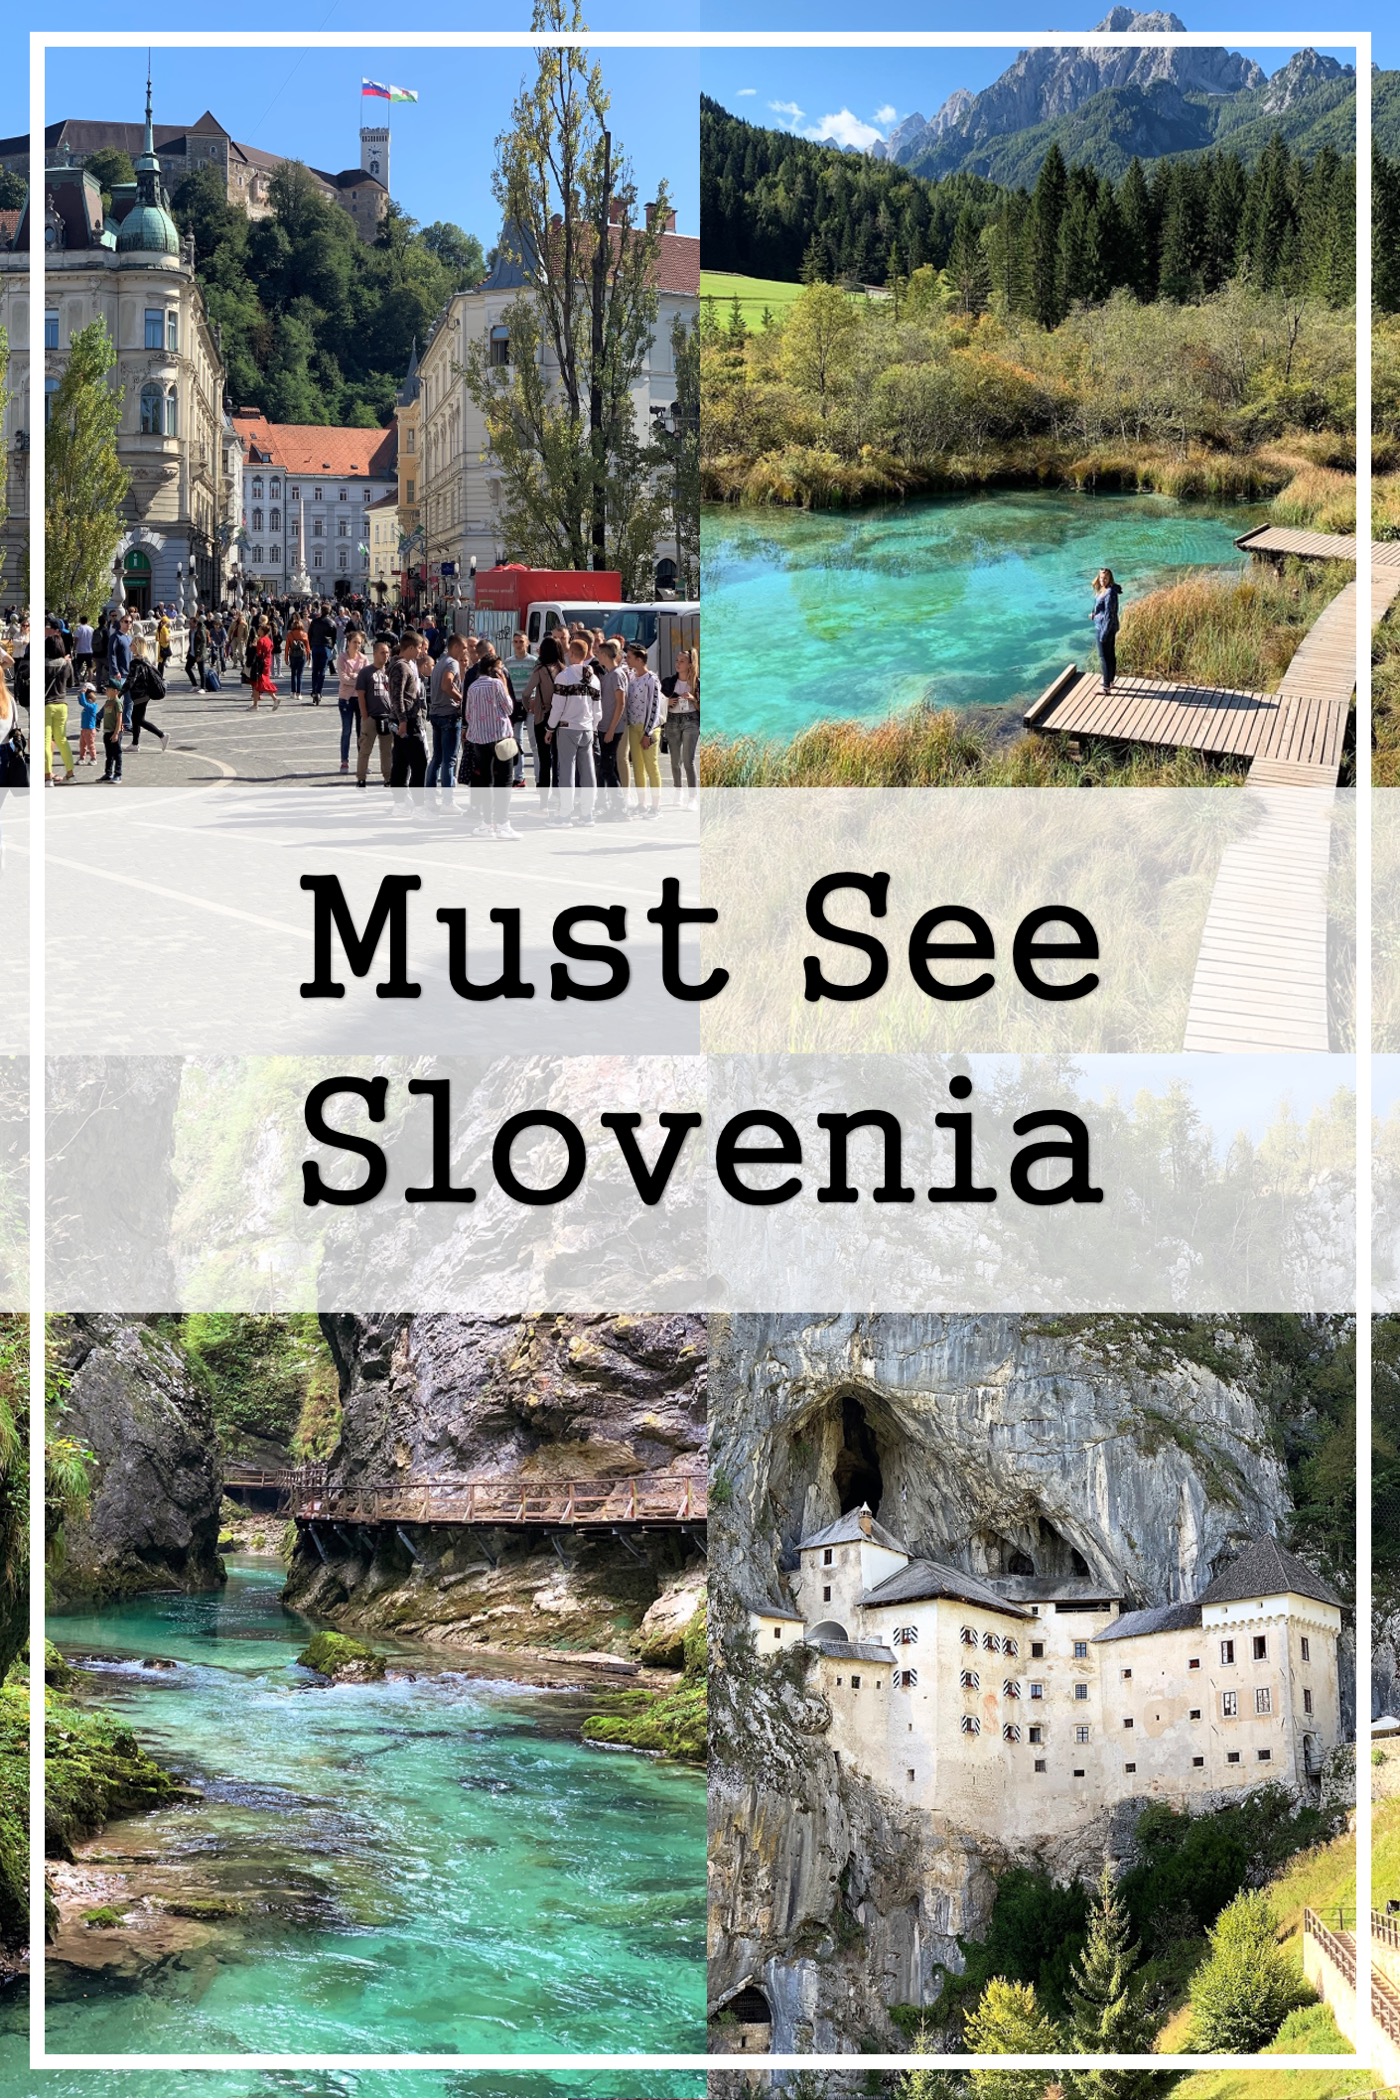 sites around slovenia including ljubljana, zelenci nature reserve, predjama castle, and vintggar gorge